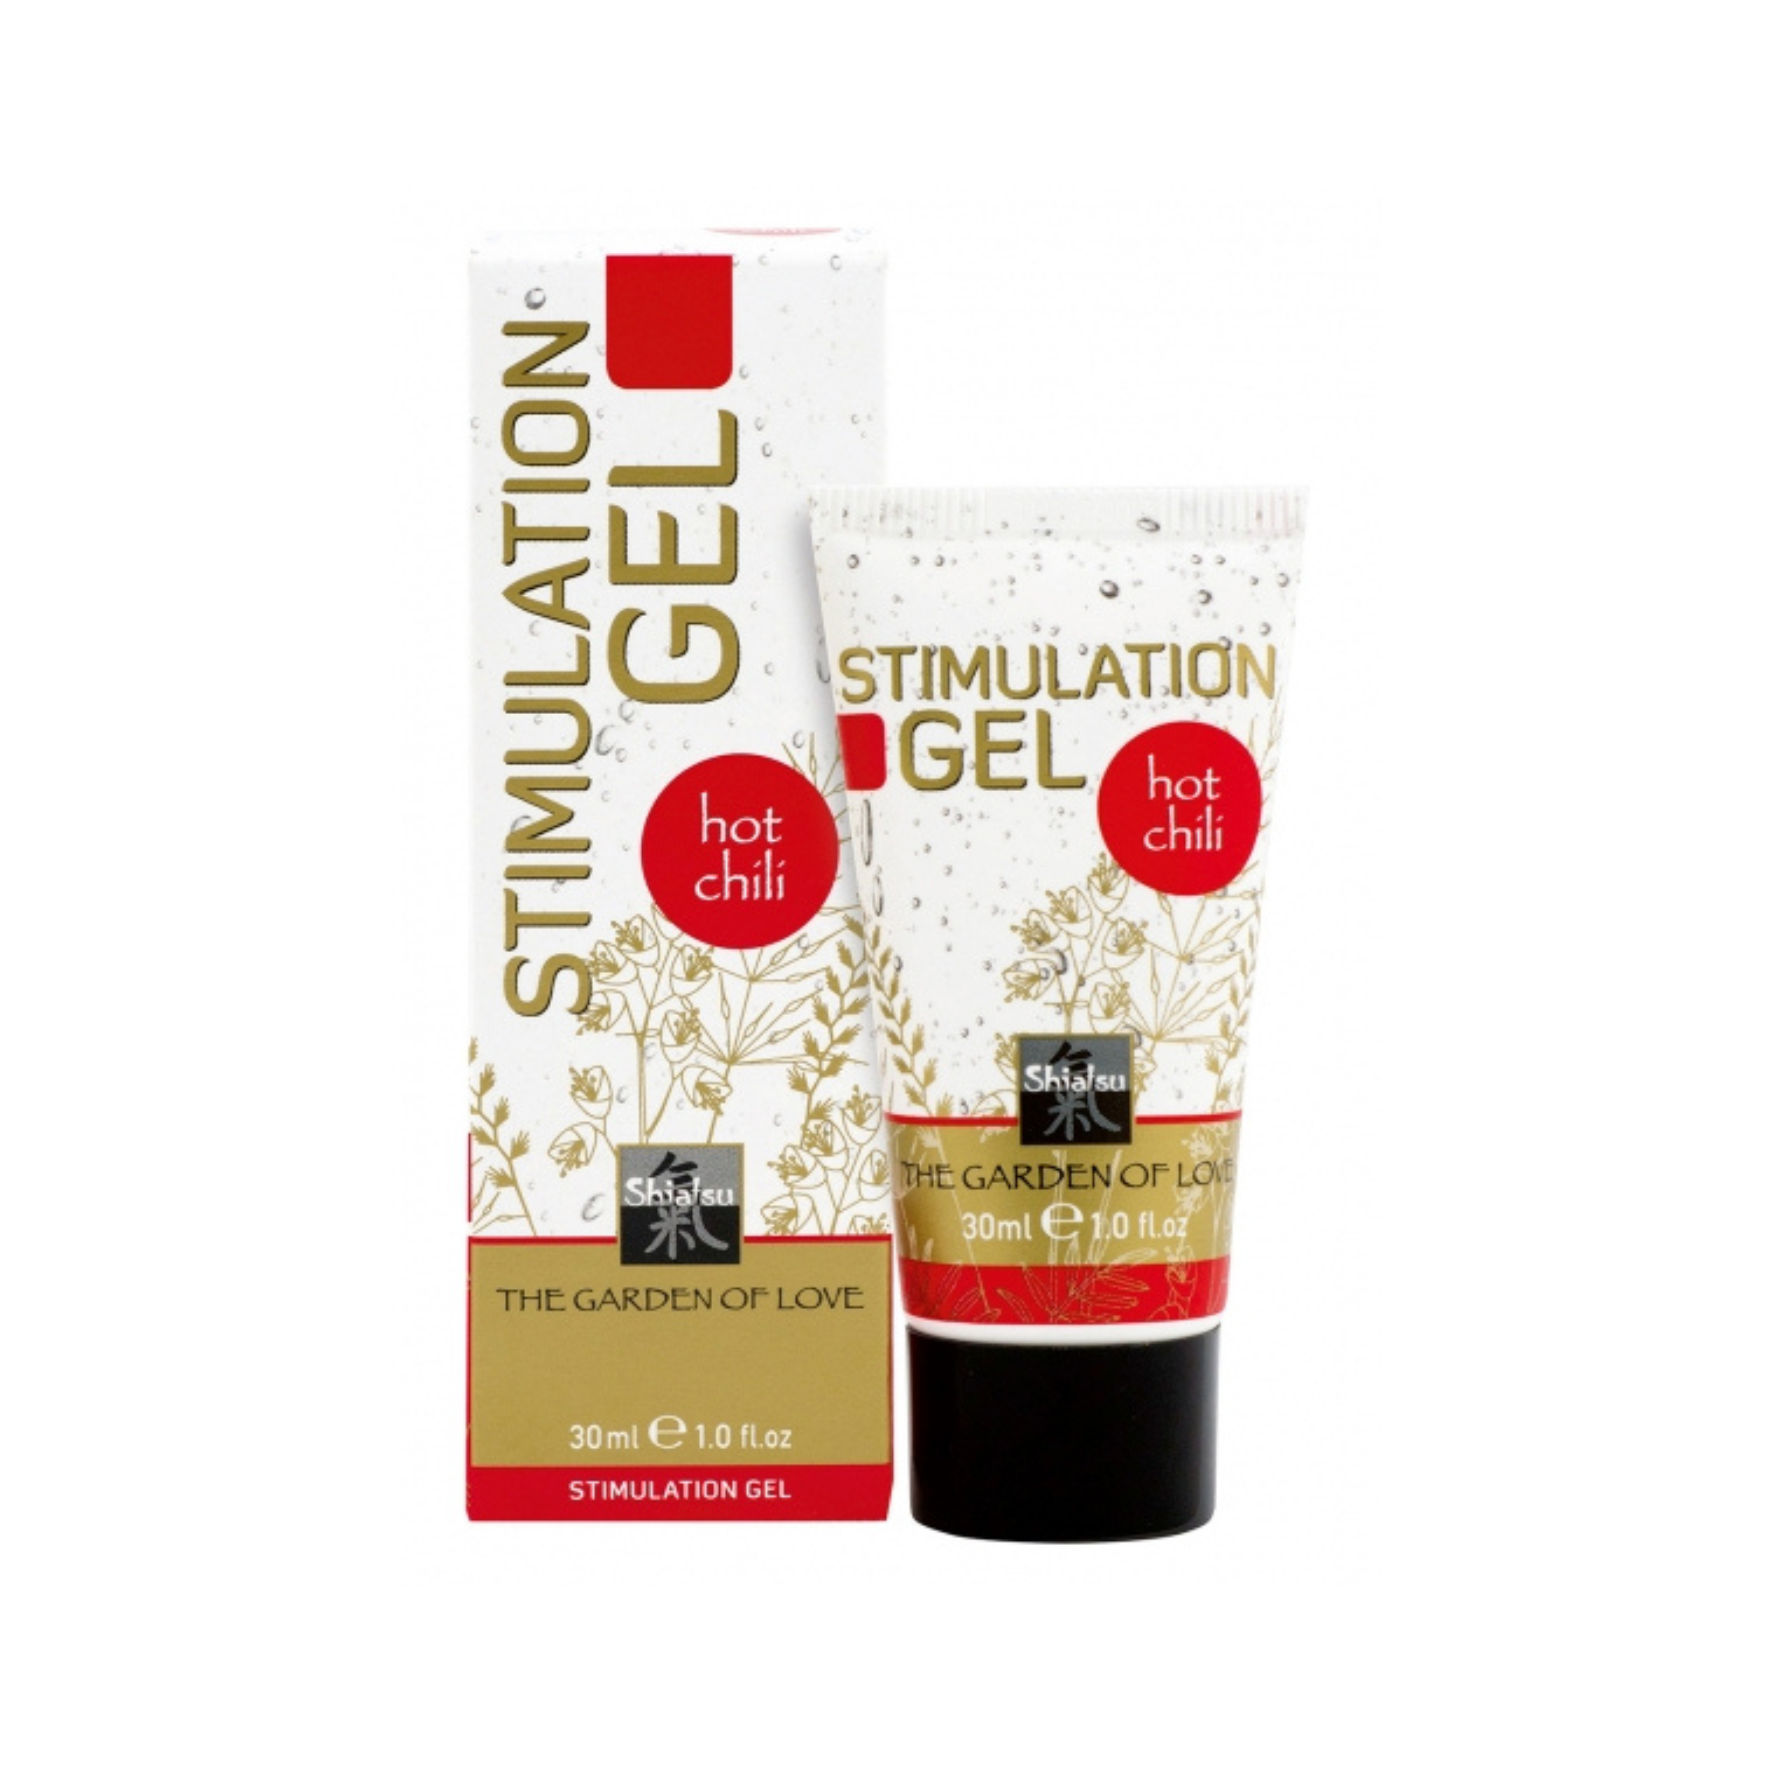 Čili aromato stimuliuojantis gelis “HOT Stimulating Gel Hot Chilli” - 30 ml 